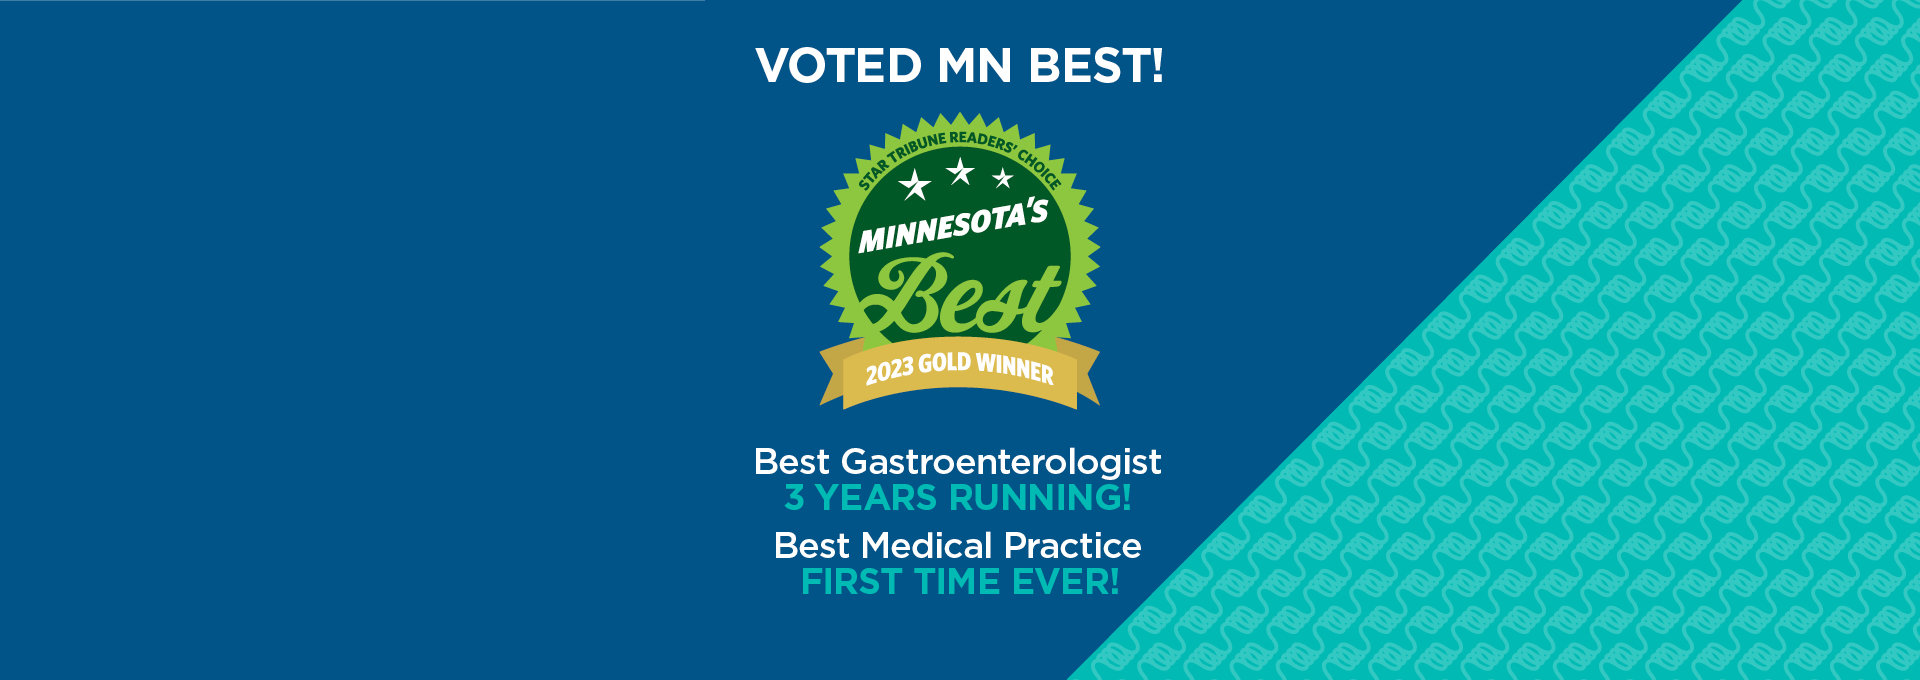 MN's Best Medical Practice & Gastroenterologist